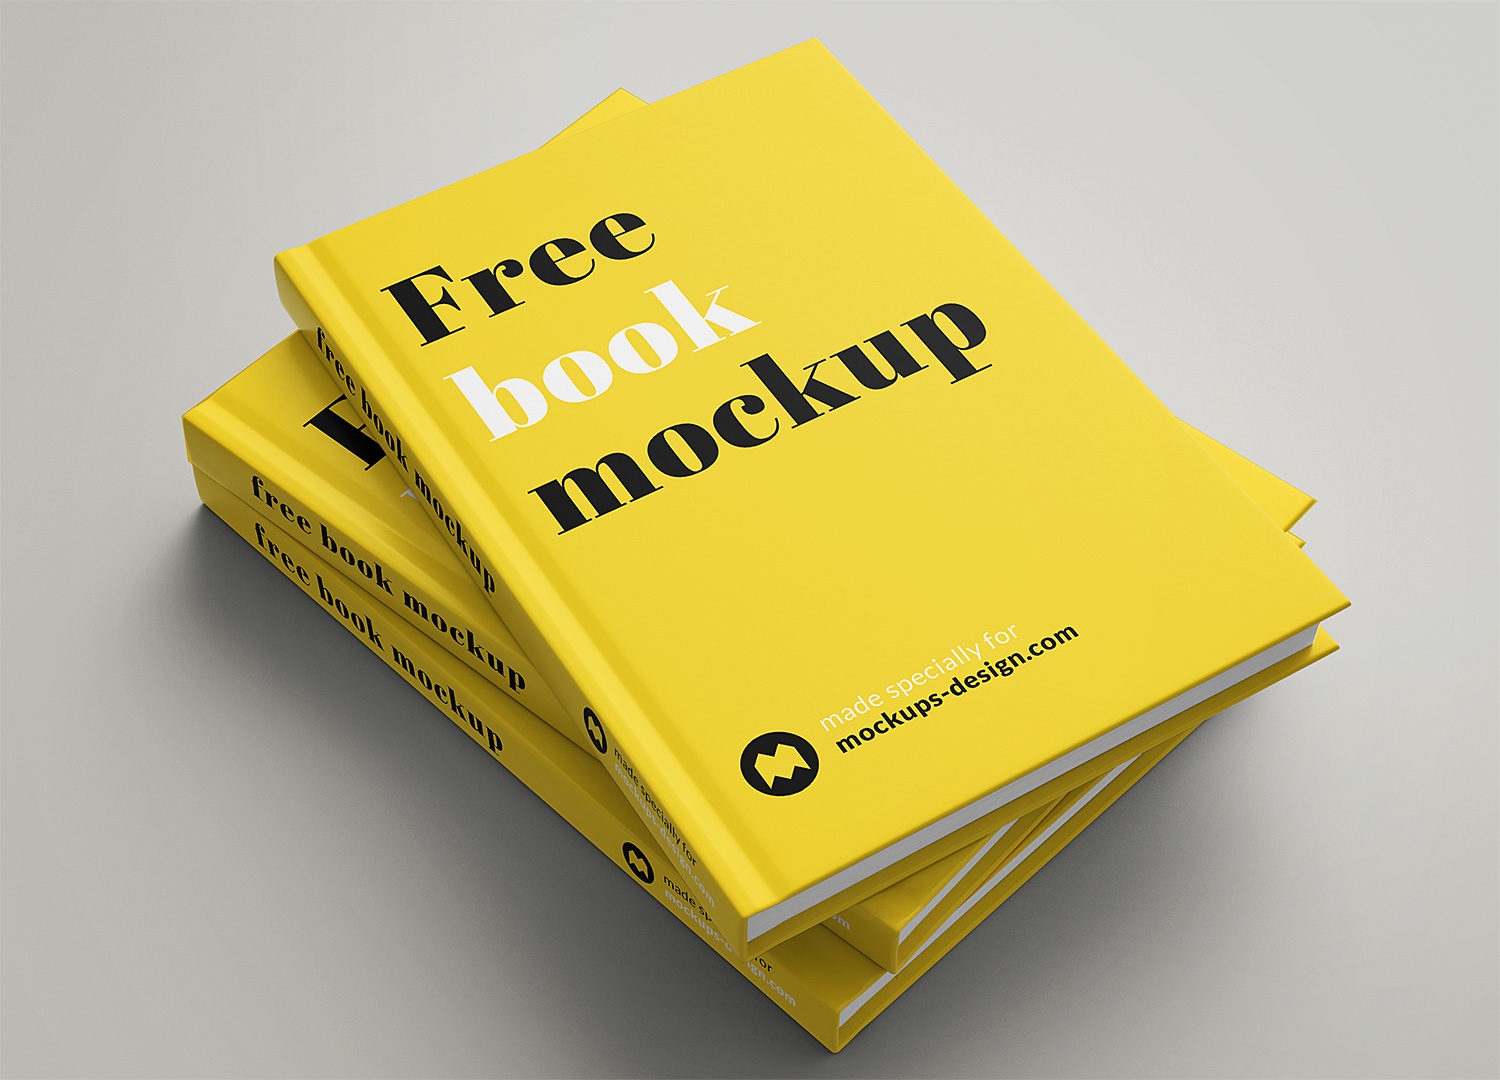 Download Book Mockup Free Set in PSD | Mockup World HQ PSD Mockup Templates